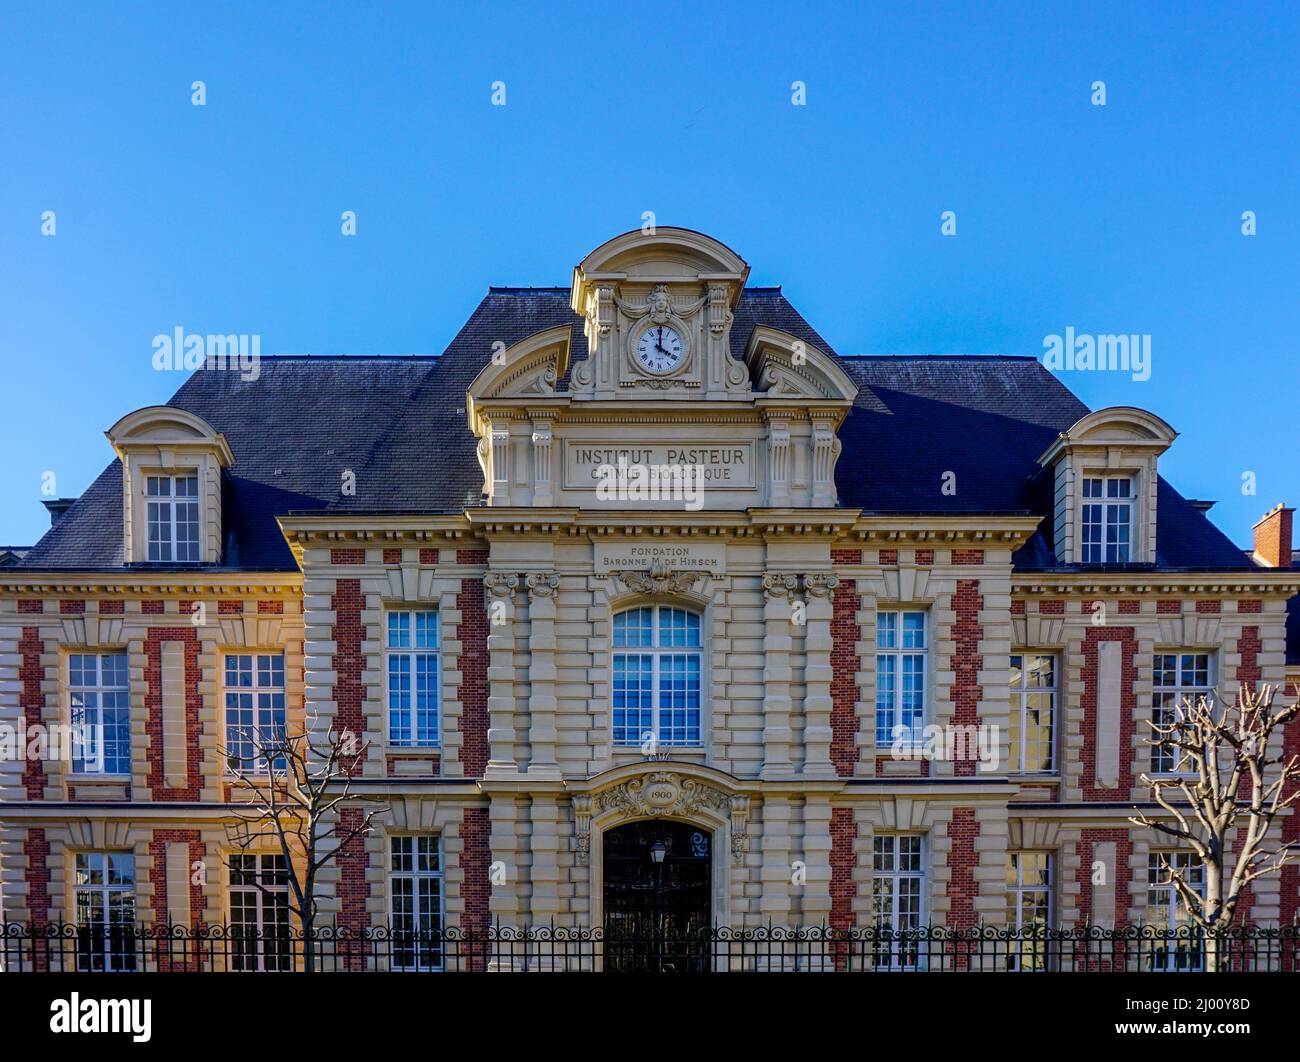 The Pasteur institute in Paris (France) Stock Photo